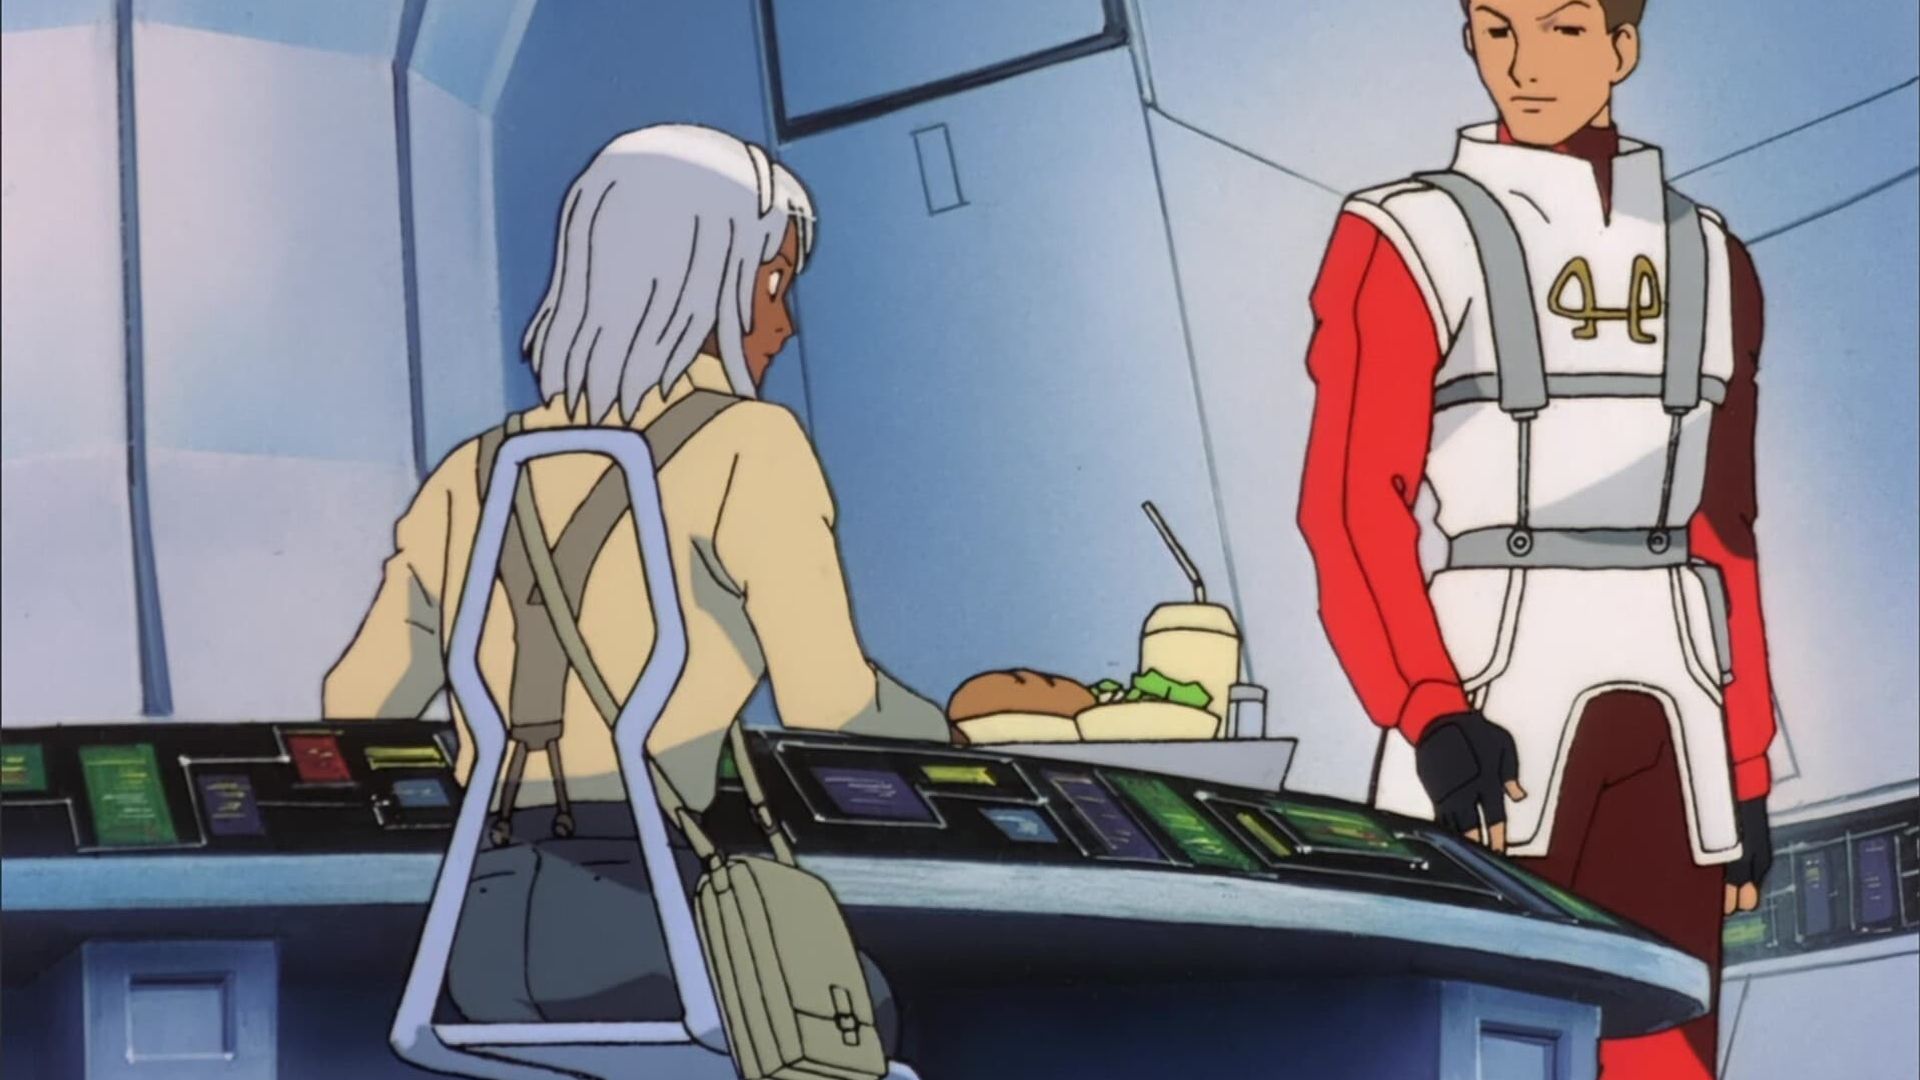 Turn-A Gundam background